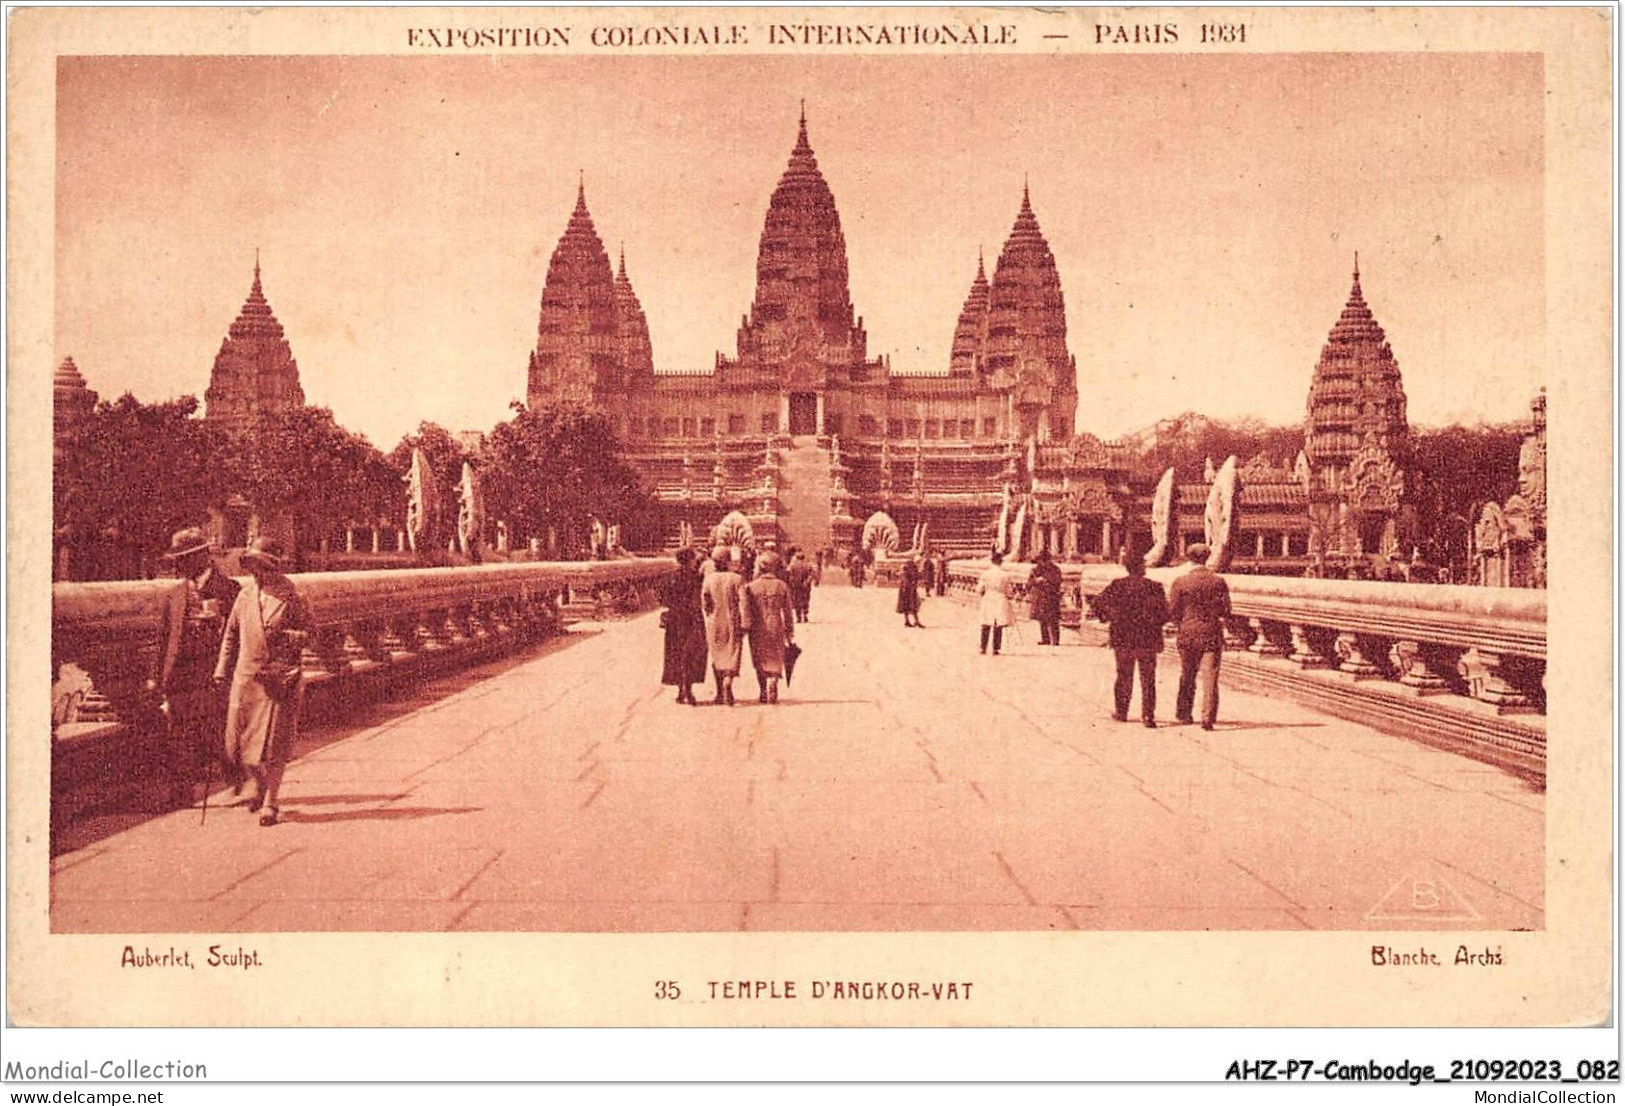 AHZP7-CAMBODGE-0637 - EXPOSITION COLONIALE INTERNATIONALE - PARIS 1931 - TEMPLE D'ANGKOR-VAT - Cambodia